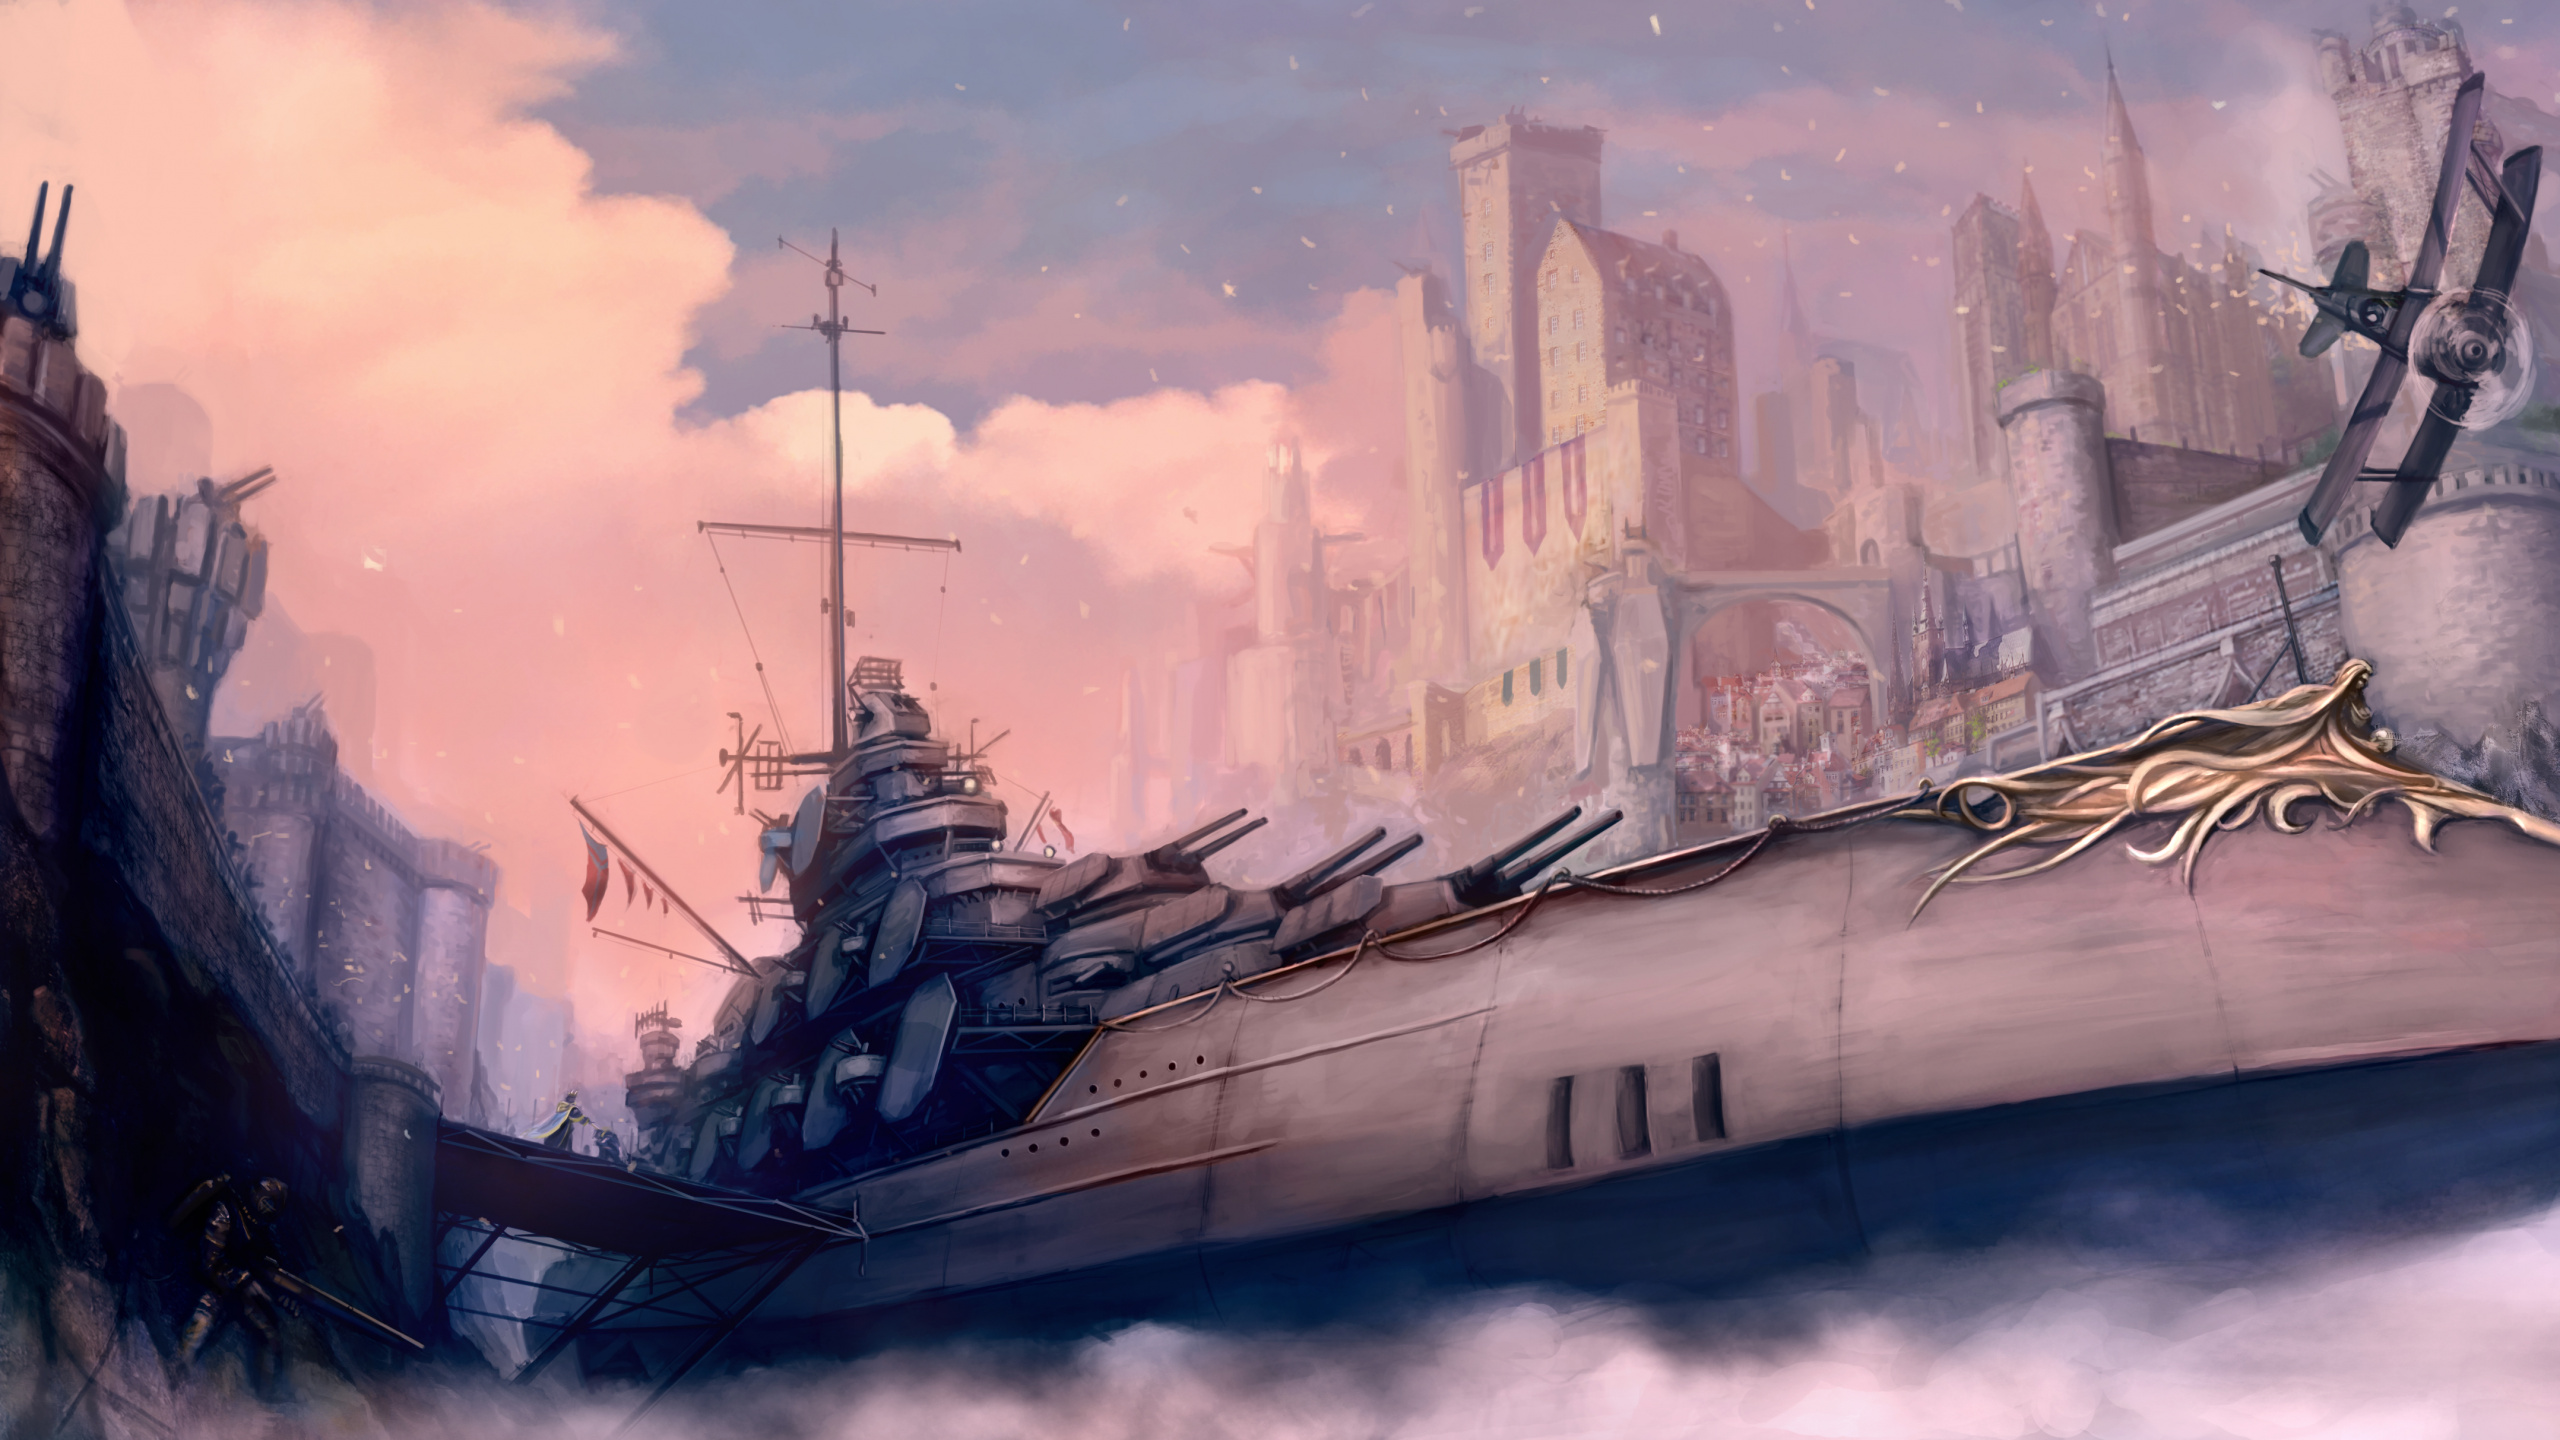 Steampunk, Schiff, Malerei, Aquarell Malen, Kriegsschiff. Wallpaper in 2560x1440 Resolution